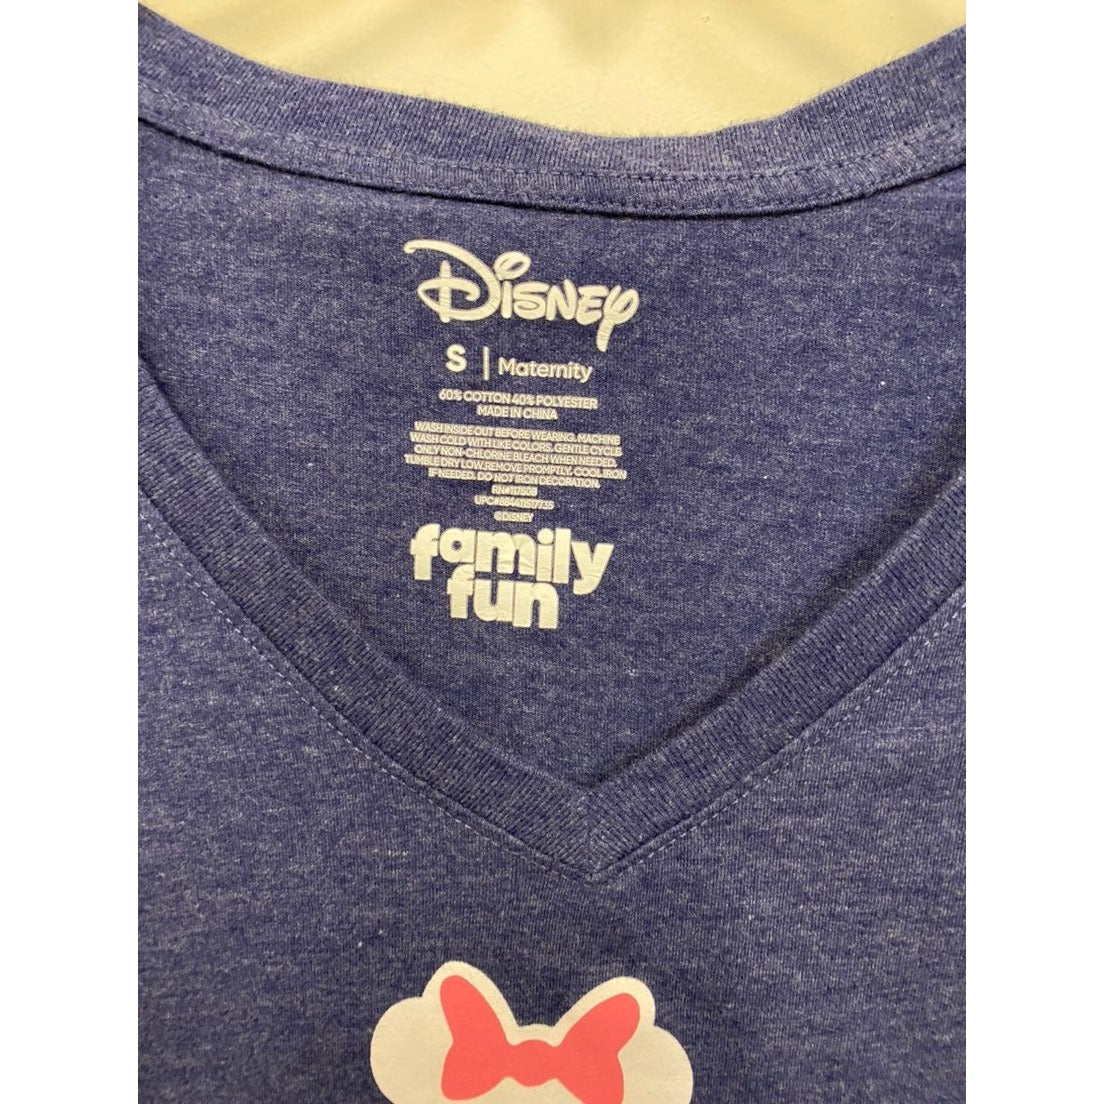 Small maternity Disney shirt